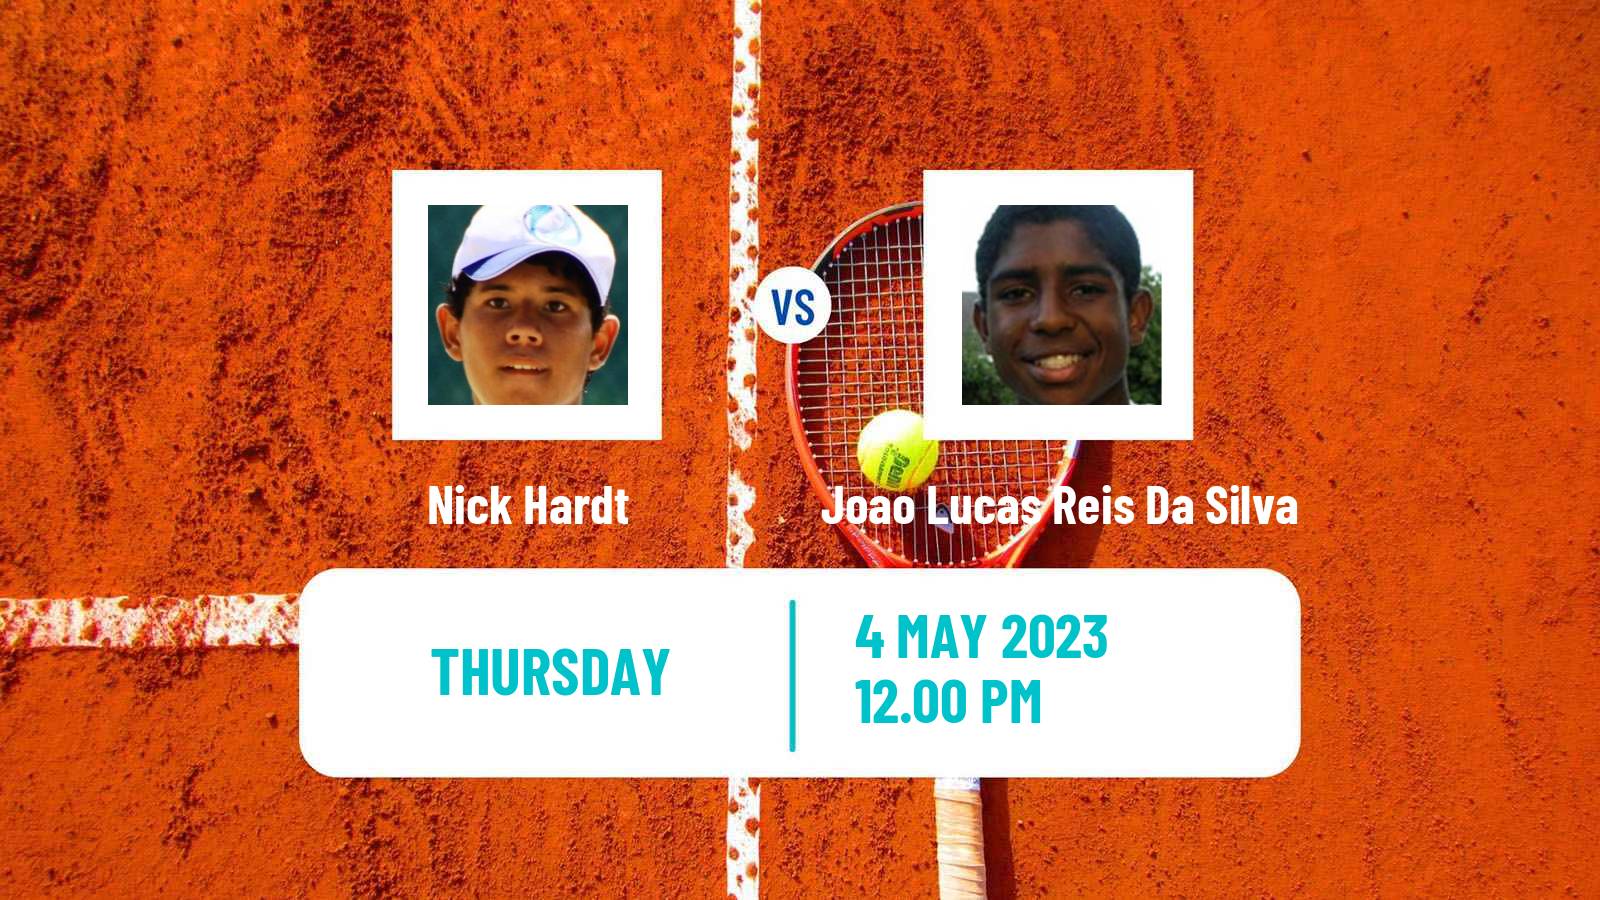 Tennis ATP Challenger Nick Hardt - Joao Lucas Reis Da Silva